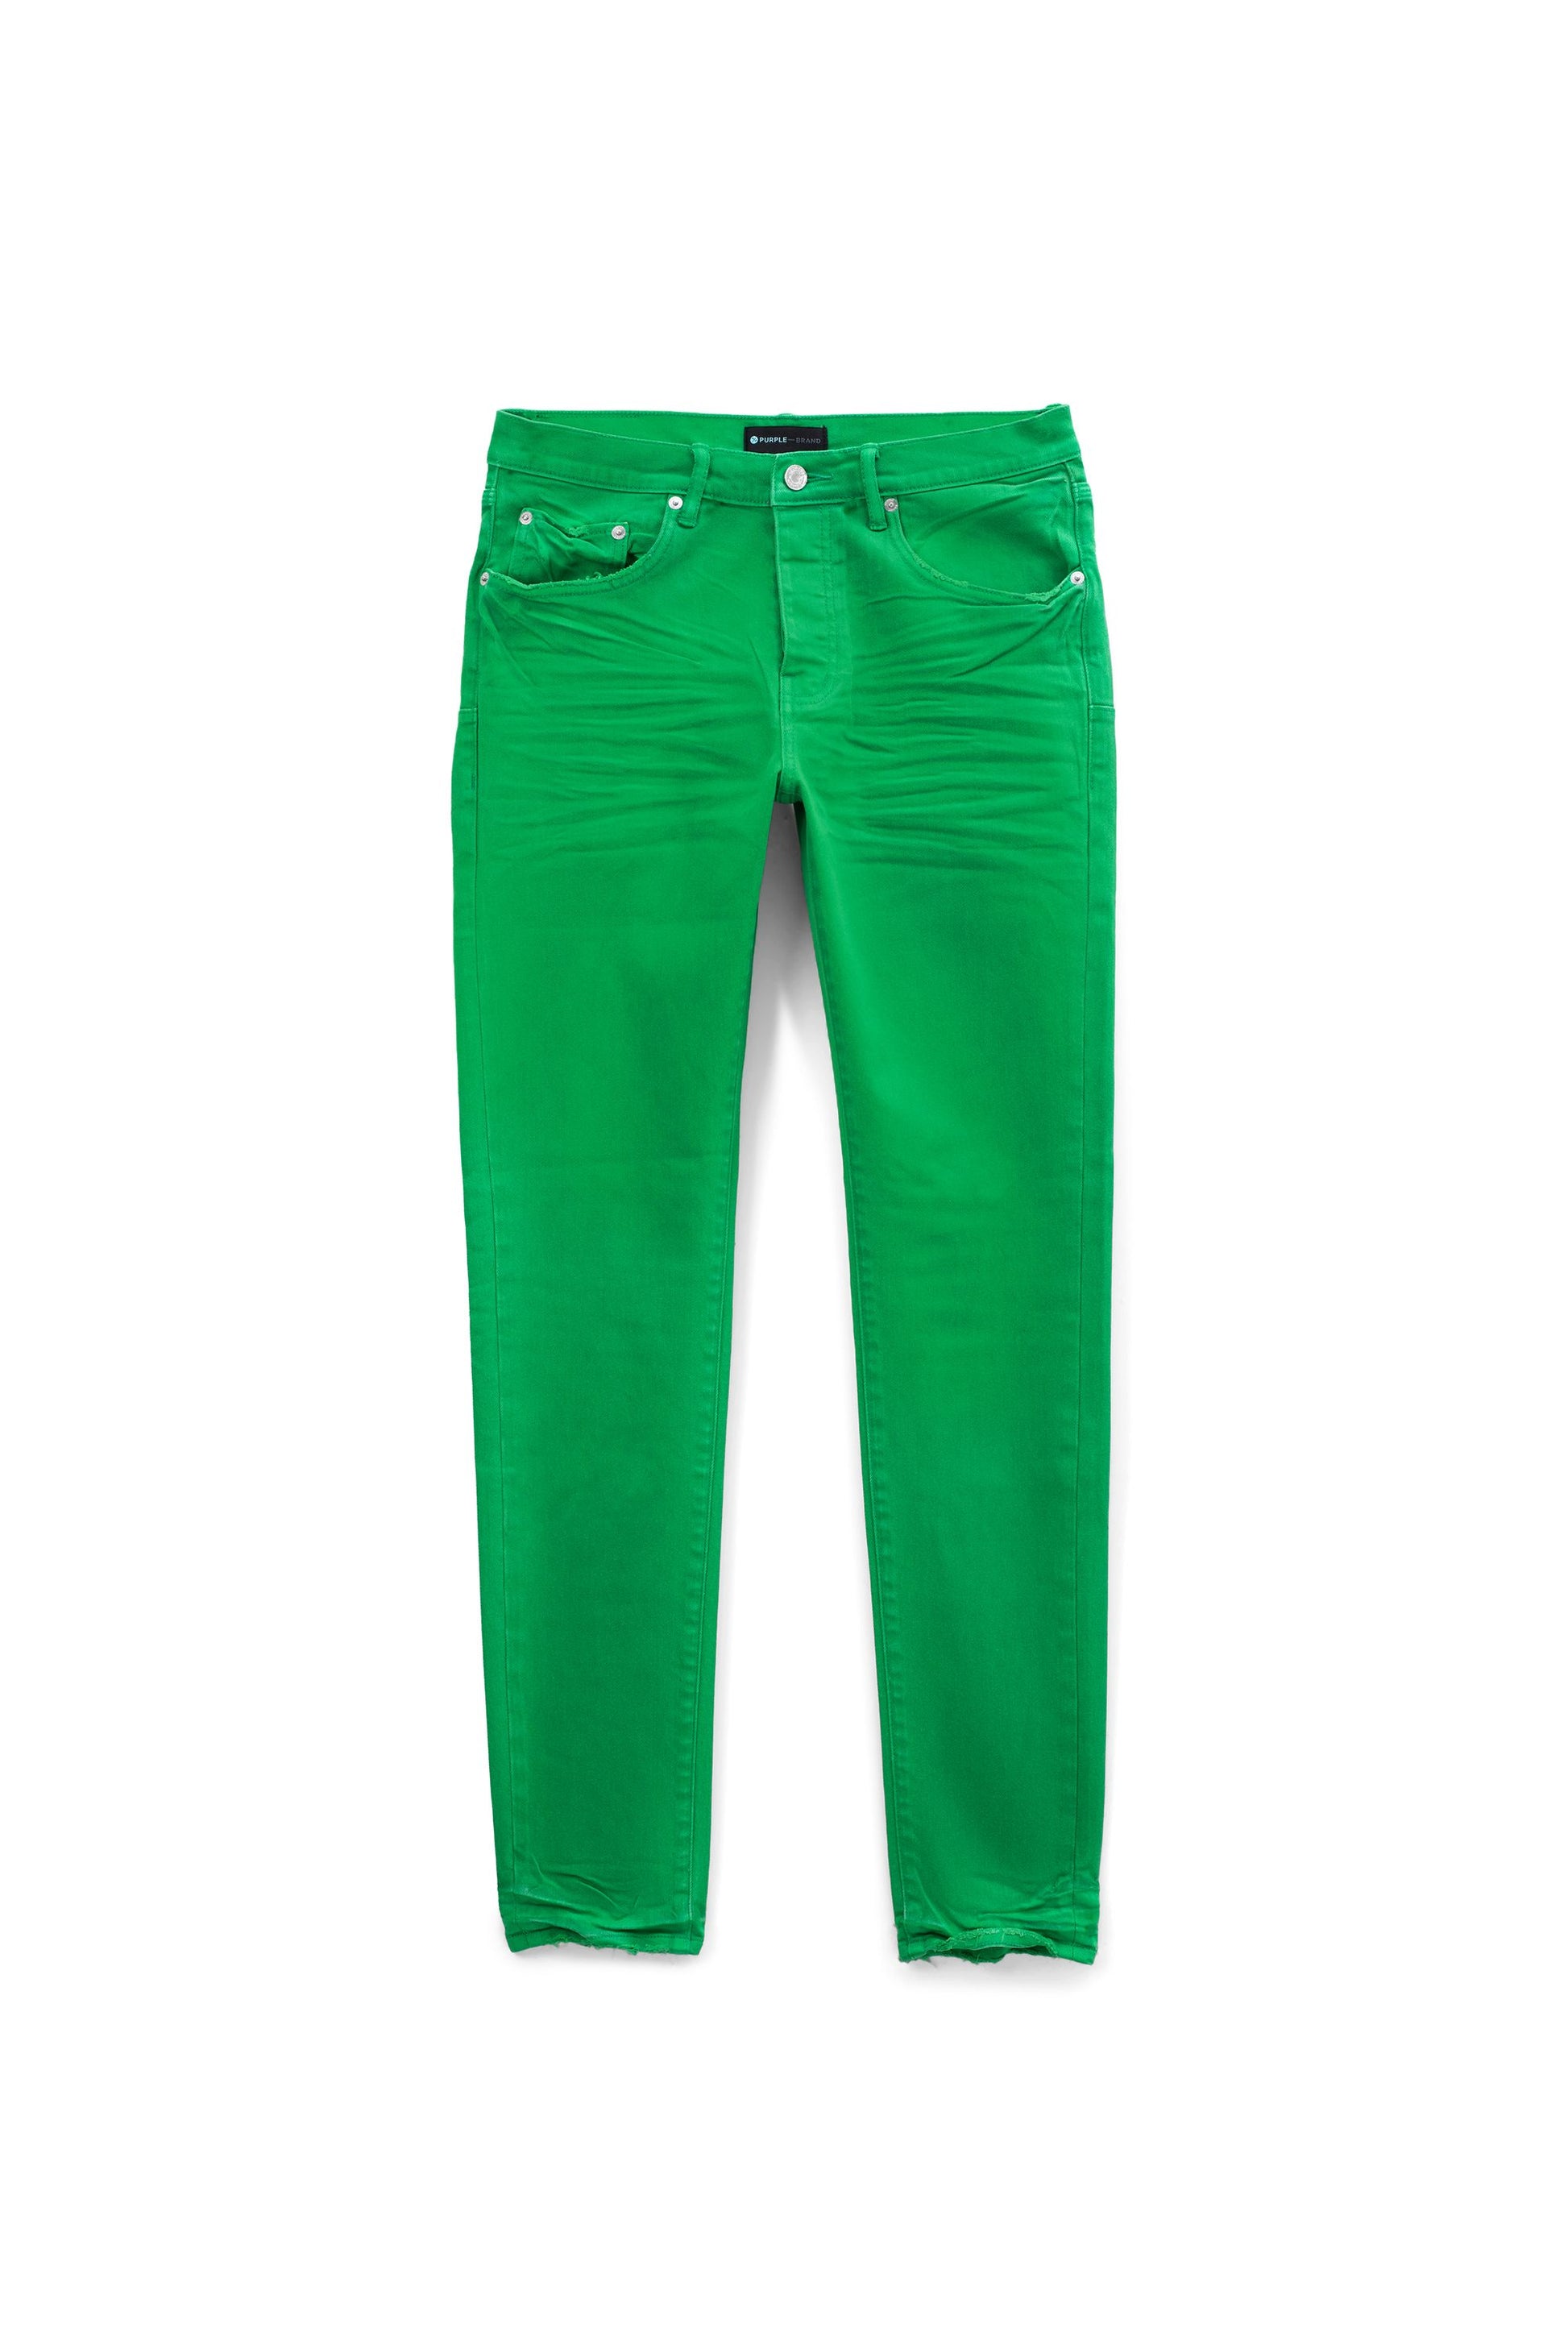 P001 LOW RISE SKINNY JEAN - Coated Green – PURPLE BRAND